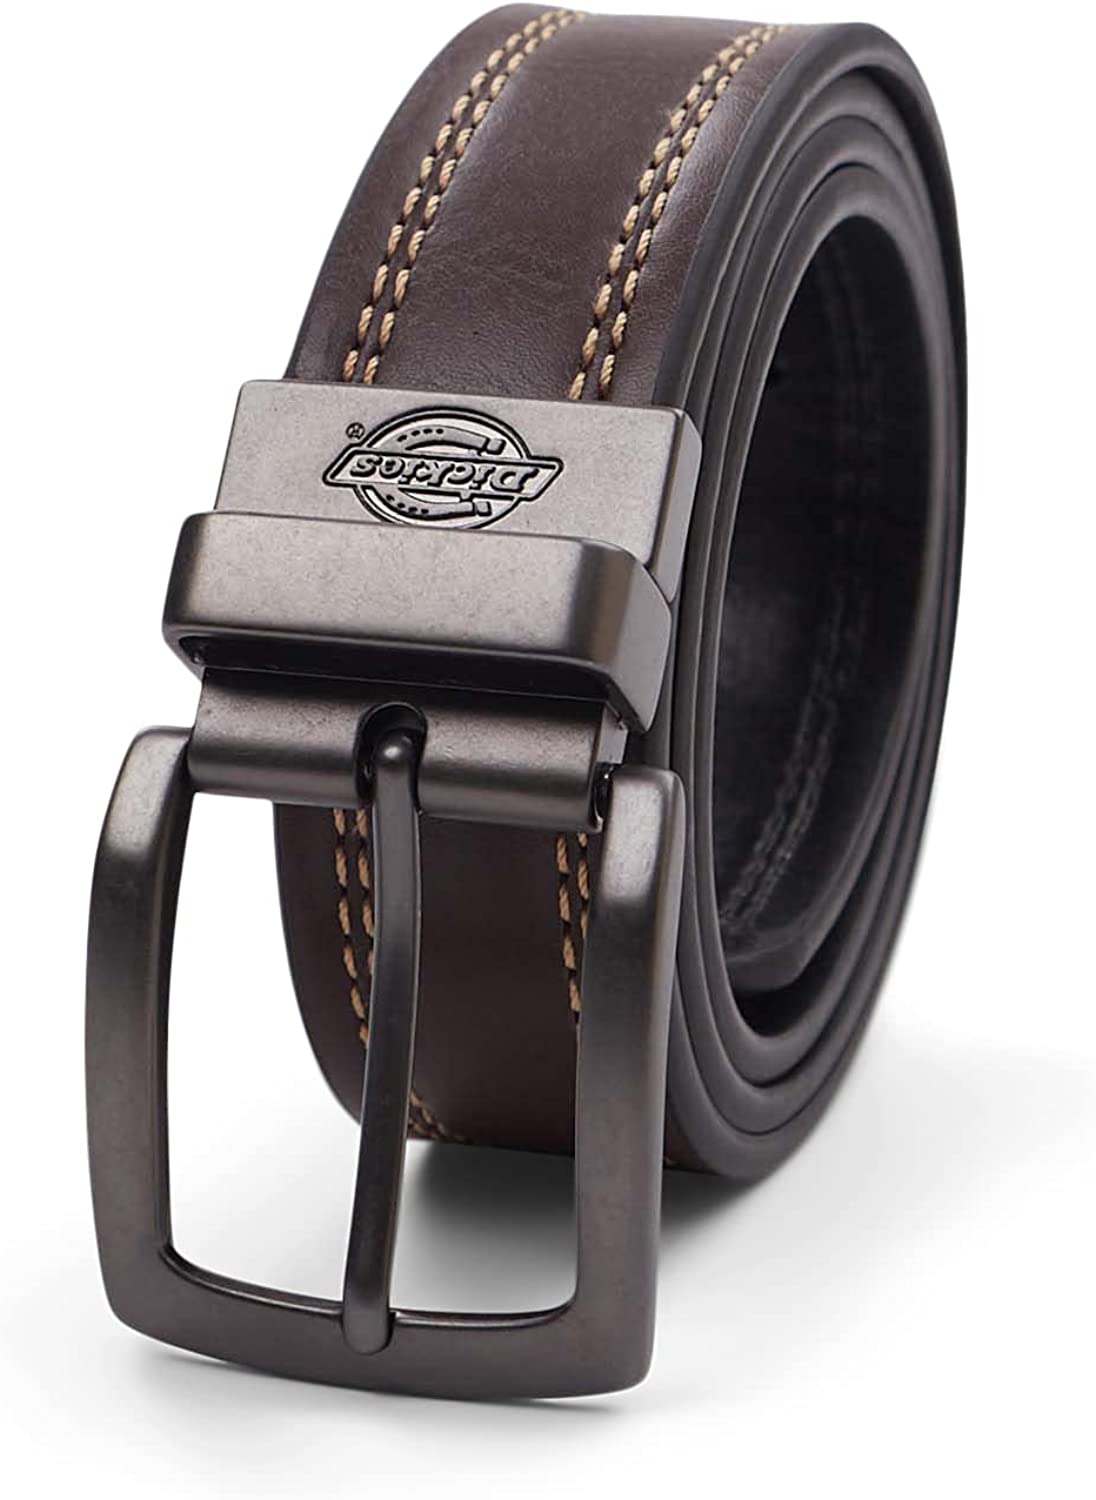 Dickies Reversible Leather Belt, Men's, Black/Brown, Size 36